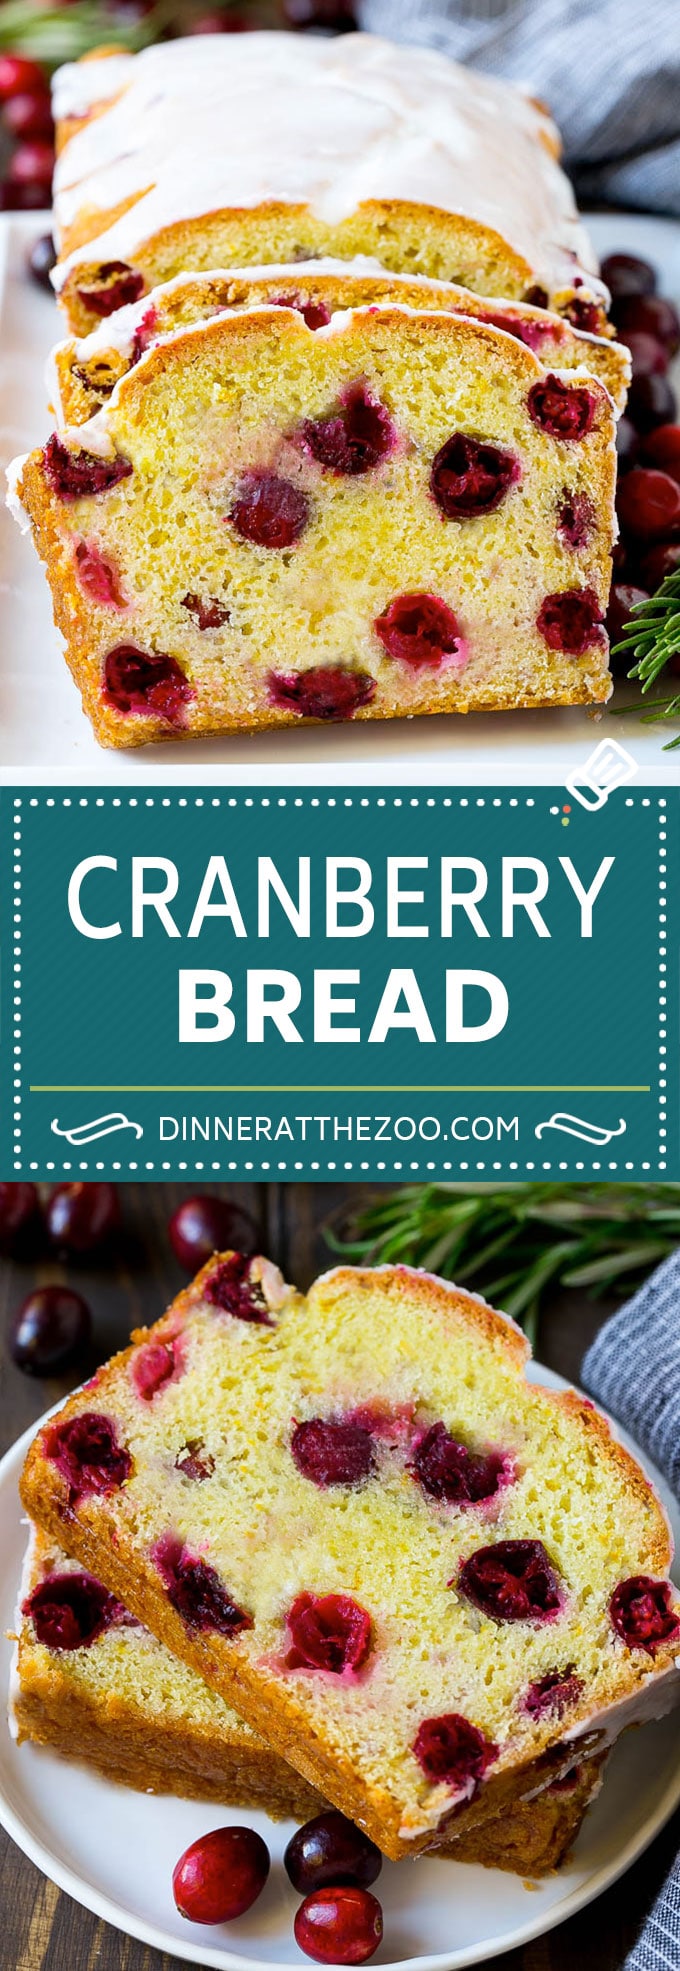 Cranberry Bread Recipe | Cranberry Loaf | Cranberry Orange Bread #cranberry #bread #baking #dessert #fall #dinneratthezoo